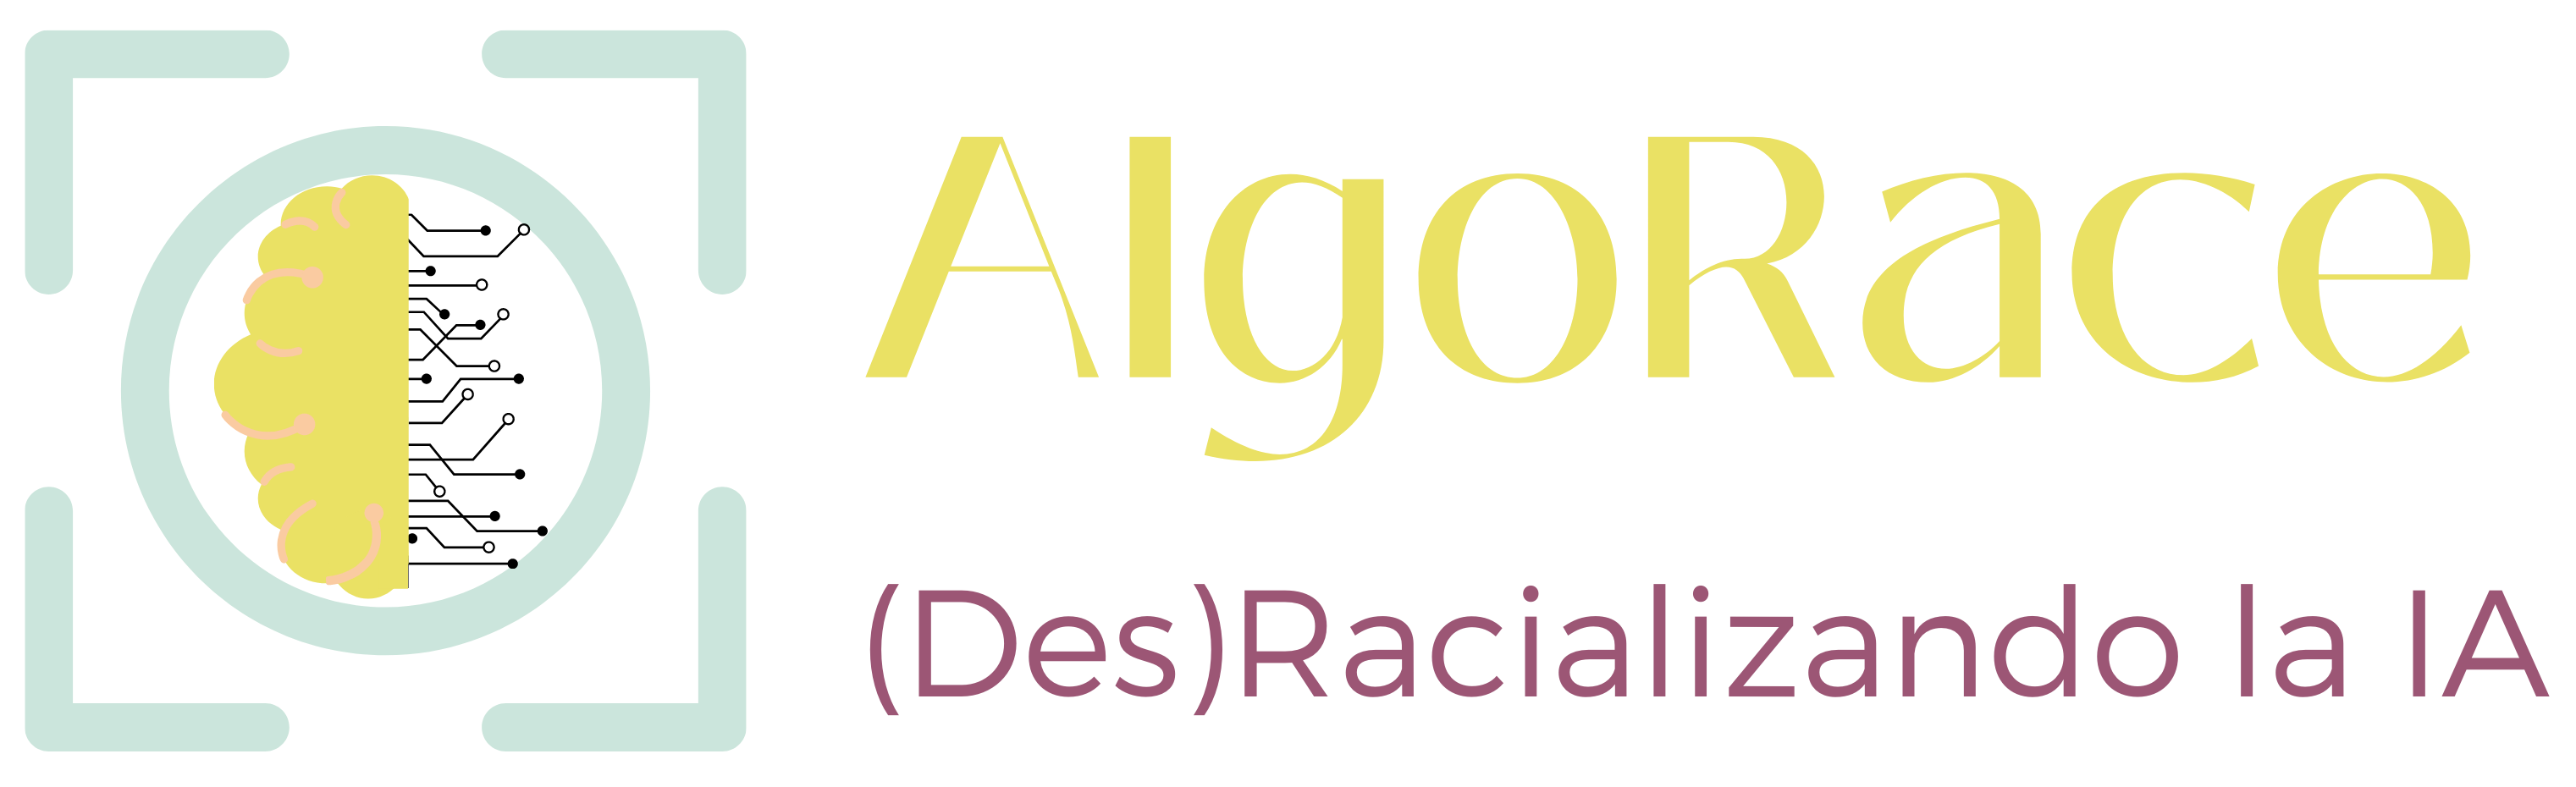 AlgoRace - (Des)Racializando la IA